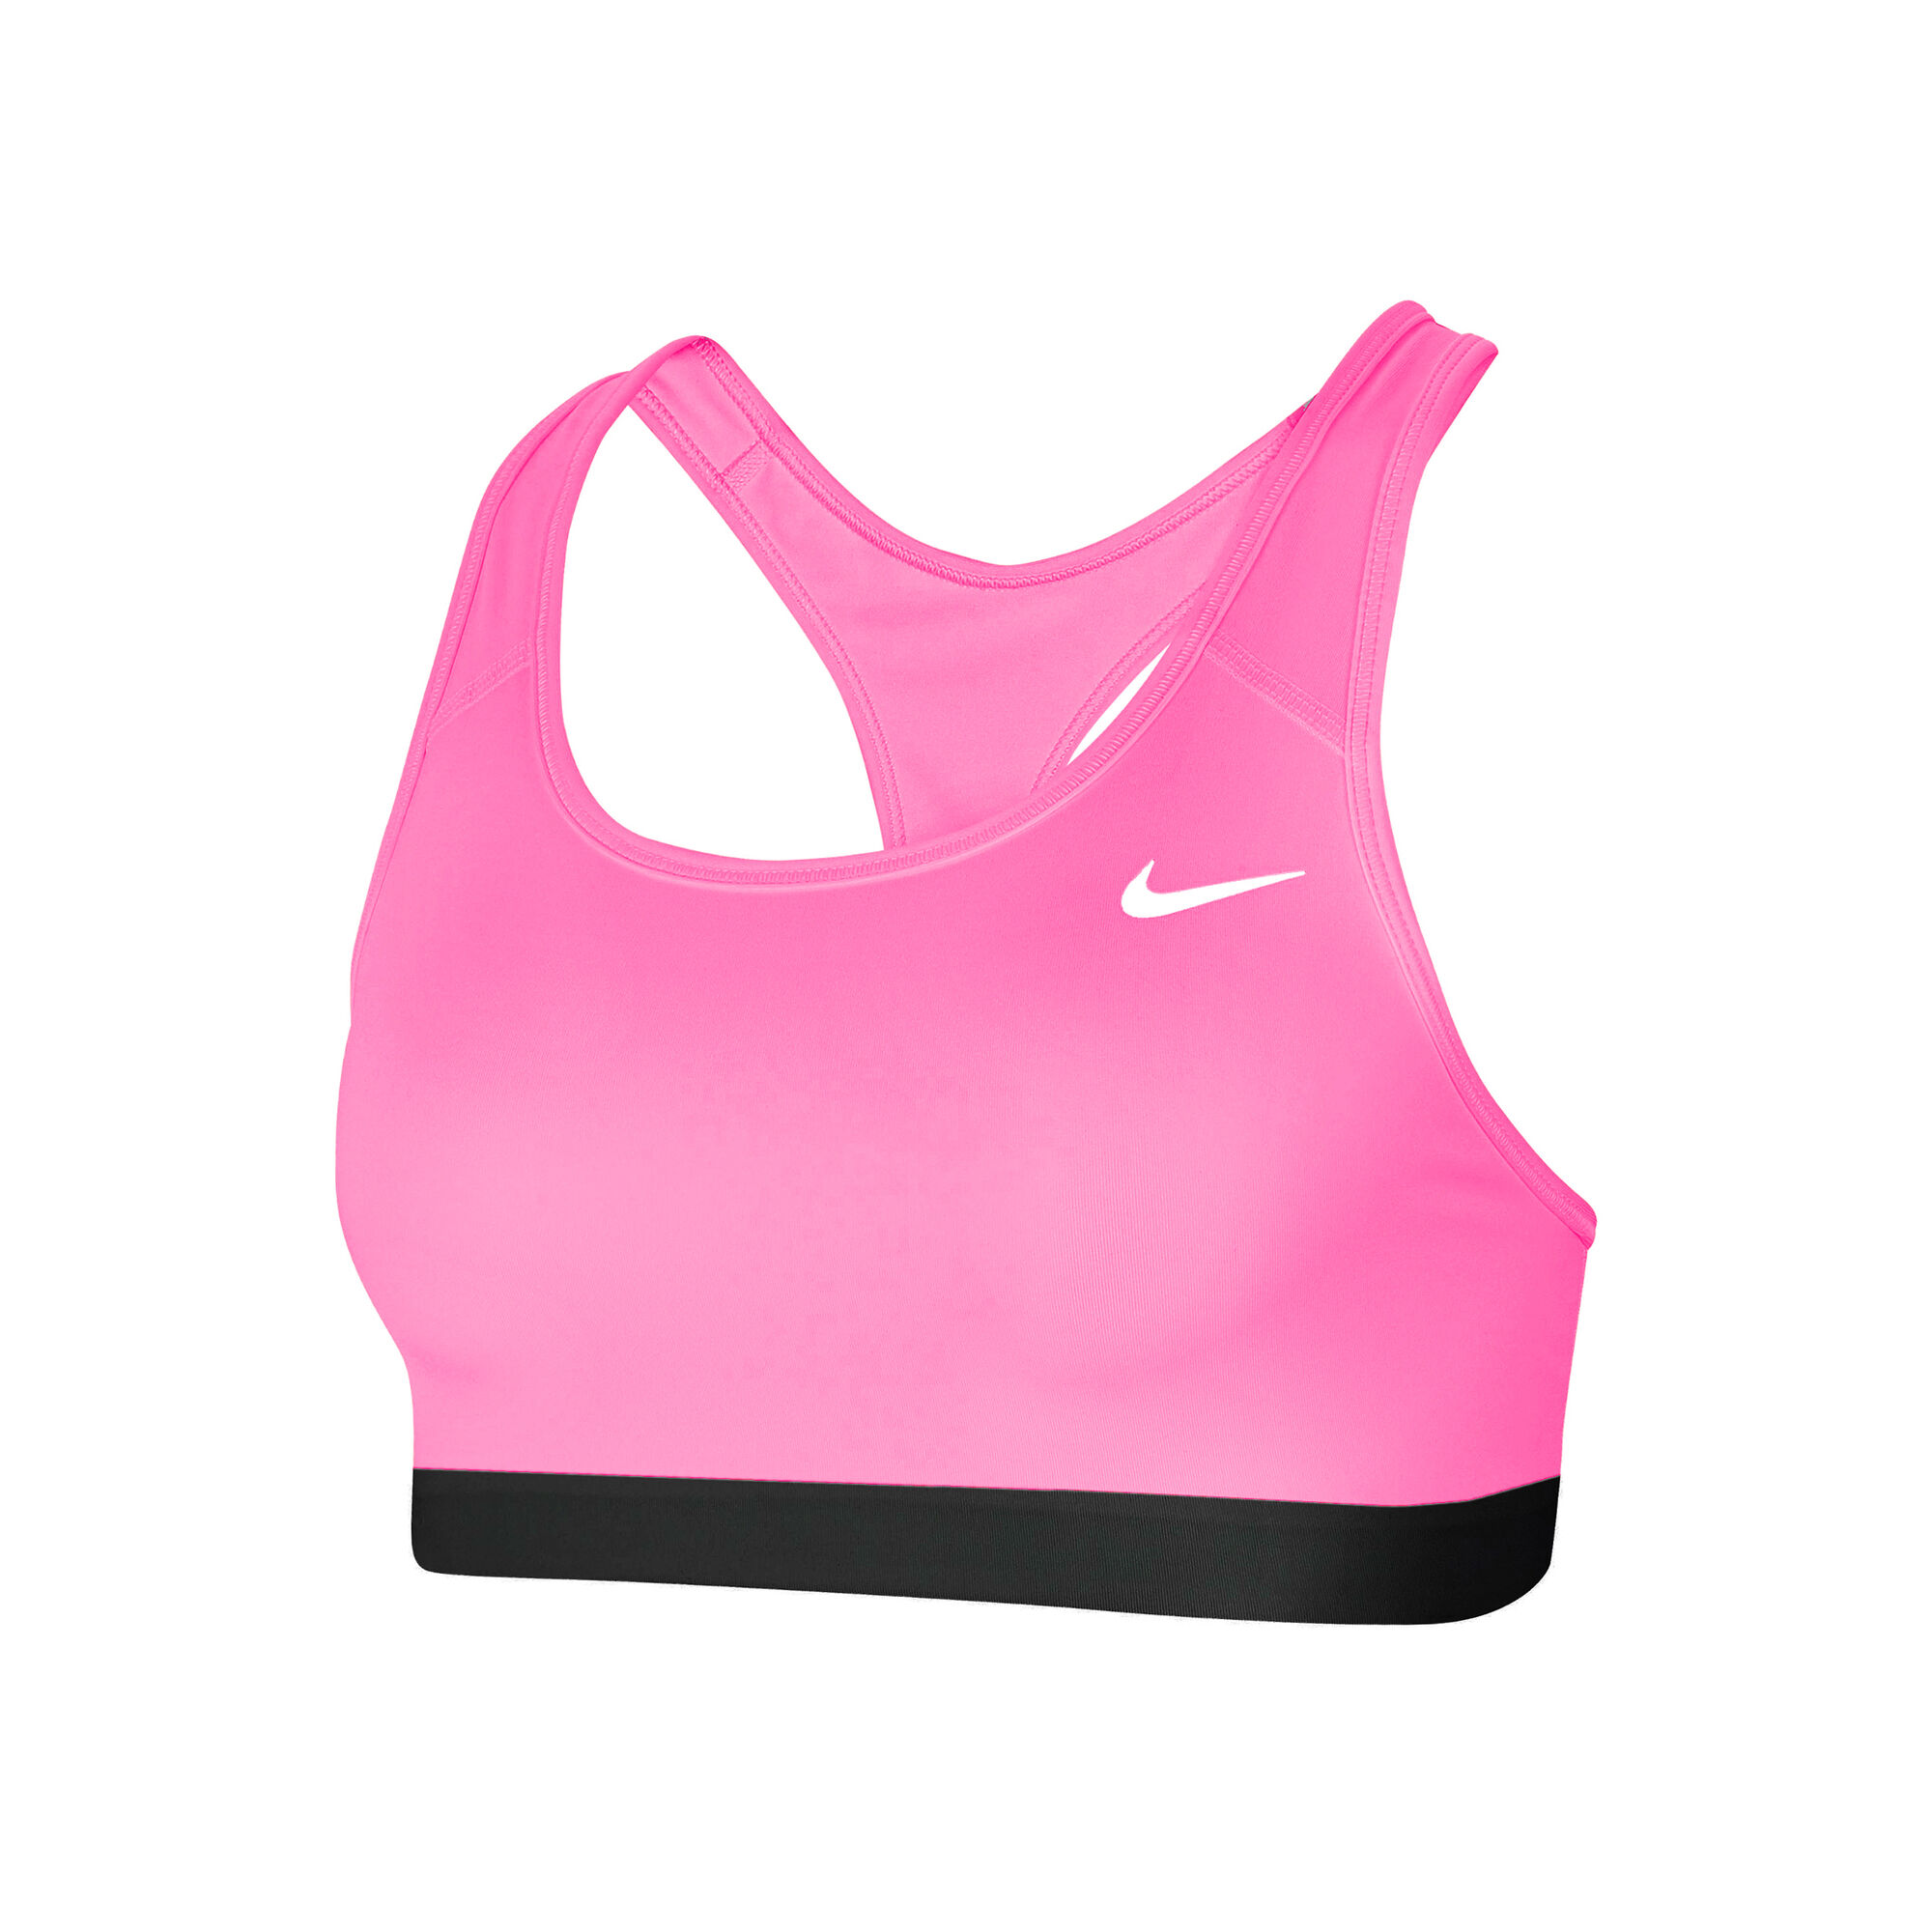 buy Nike Sports Bras Girls - Pink, Black online | Tennis-Point